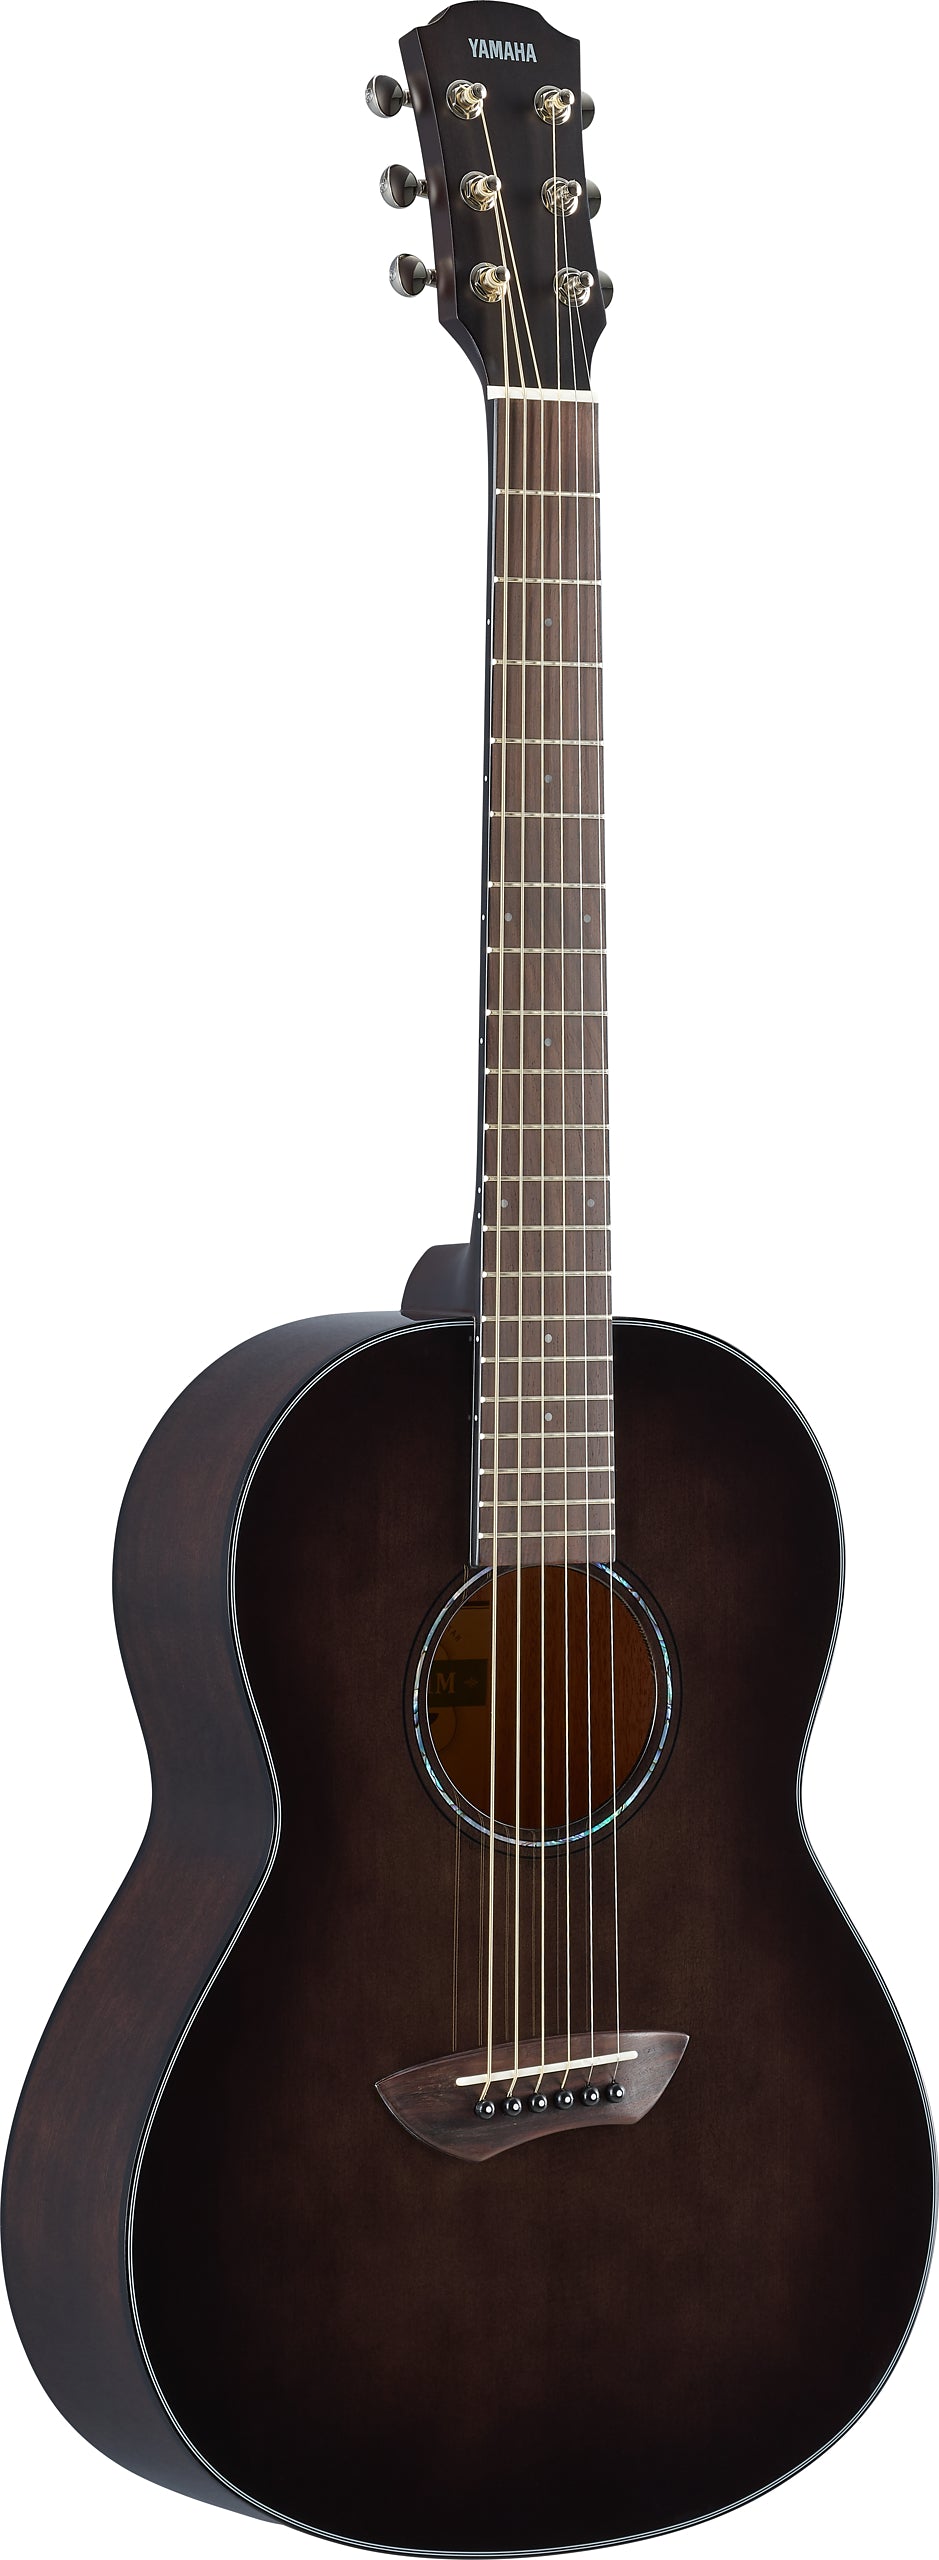 Yamaha CSF1M TBL Folk Guitar - Translucent Black w/Gig Bag